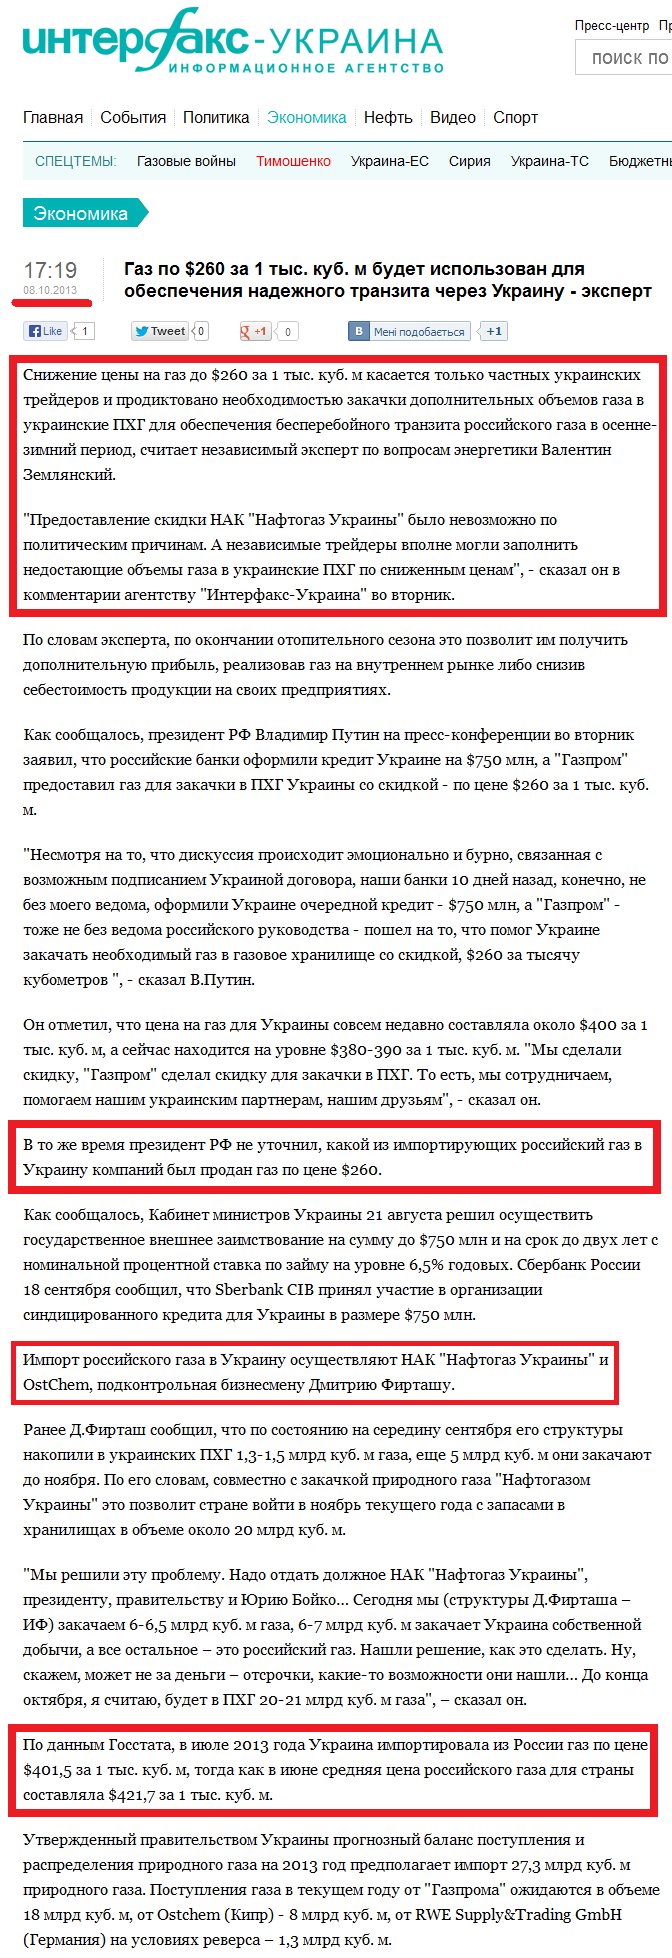 http://interfax.com.ua/news/economic/169743.html